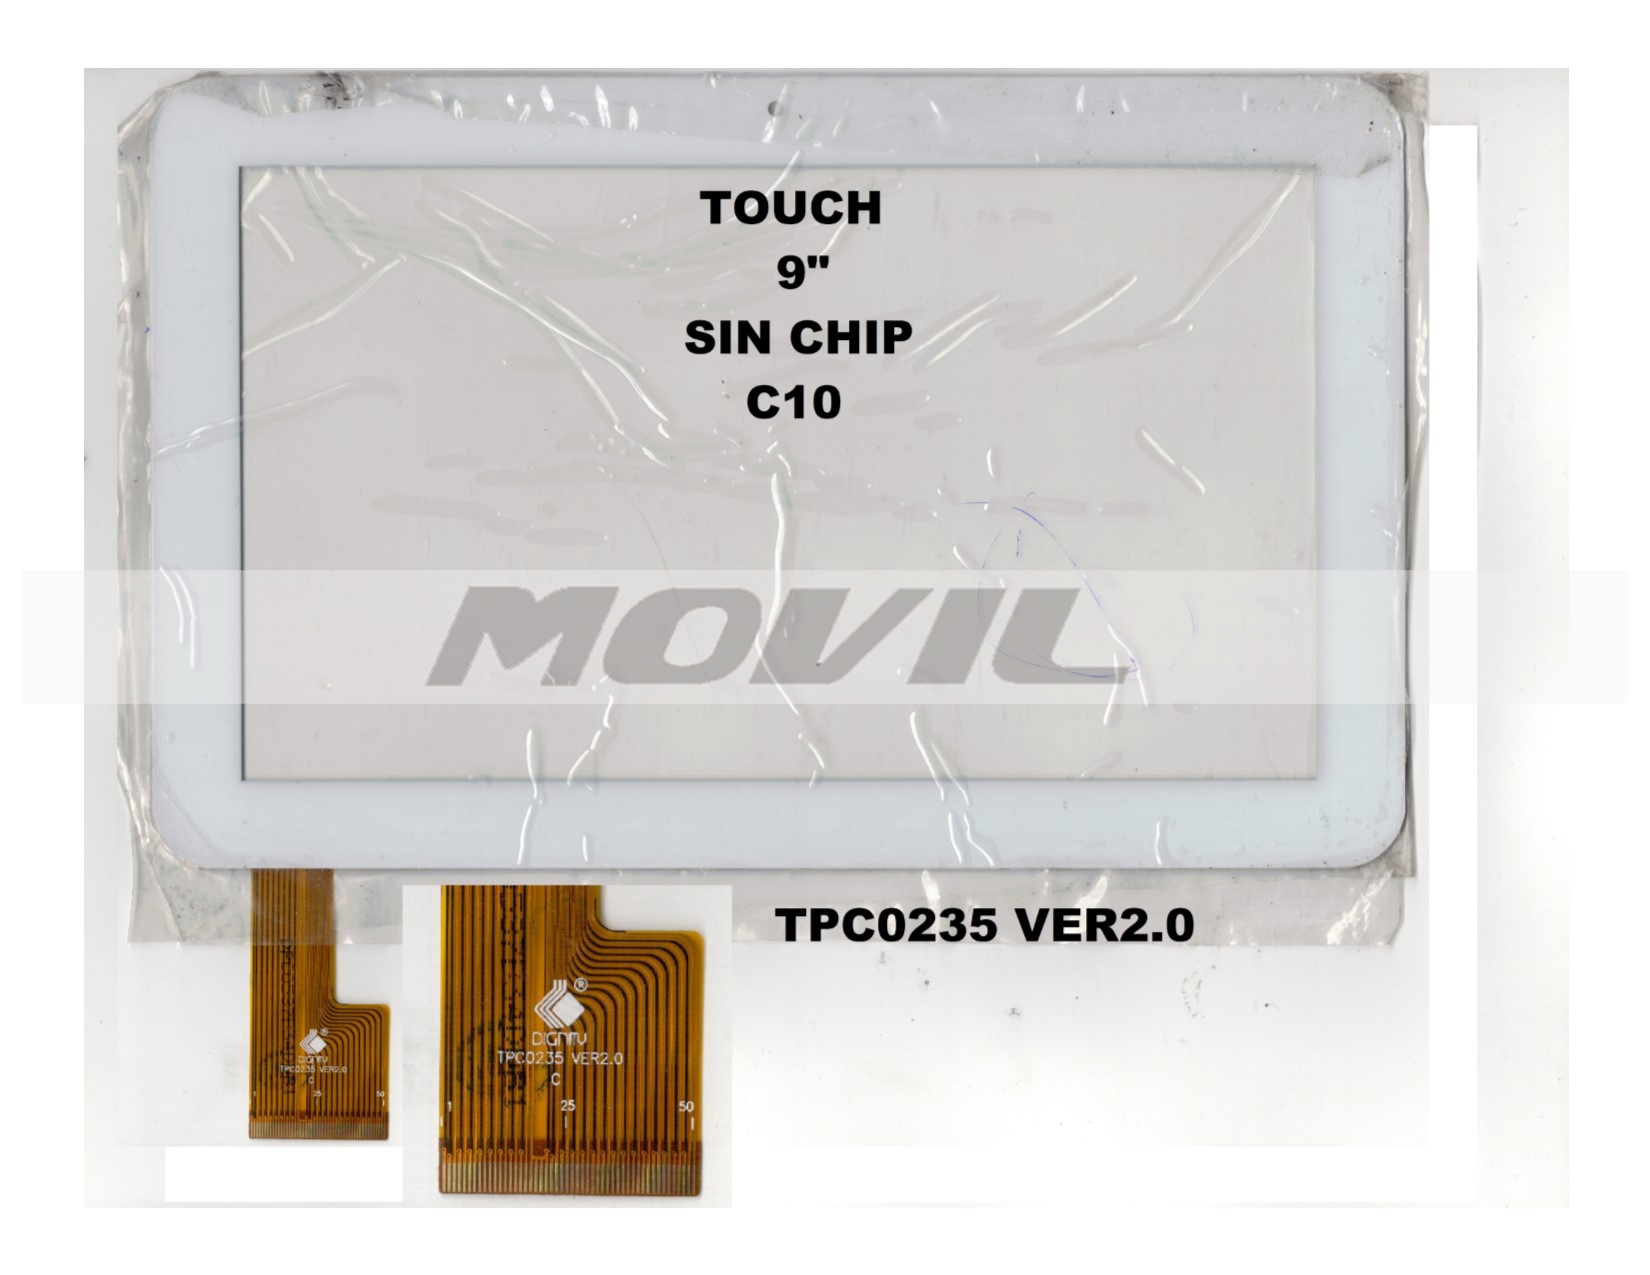 Touch tactil para tablet flex 9 inch SIN CHIP C10 TPC0235 VER2.0